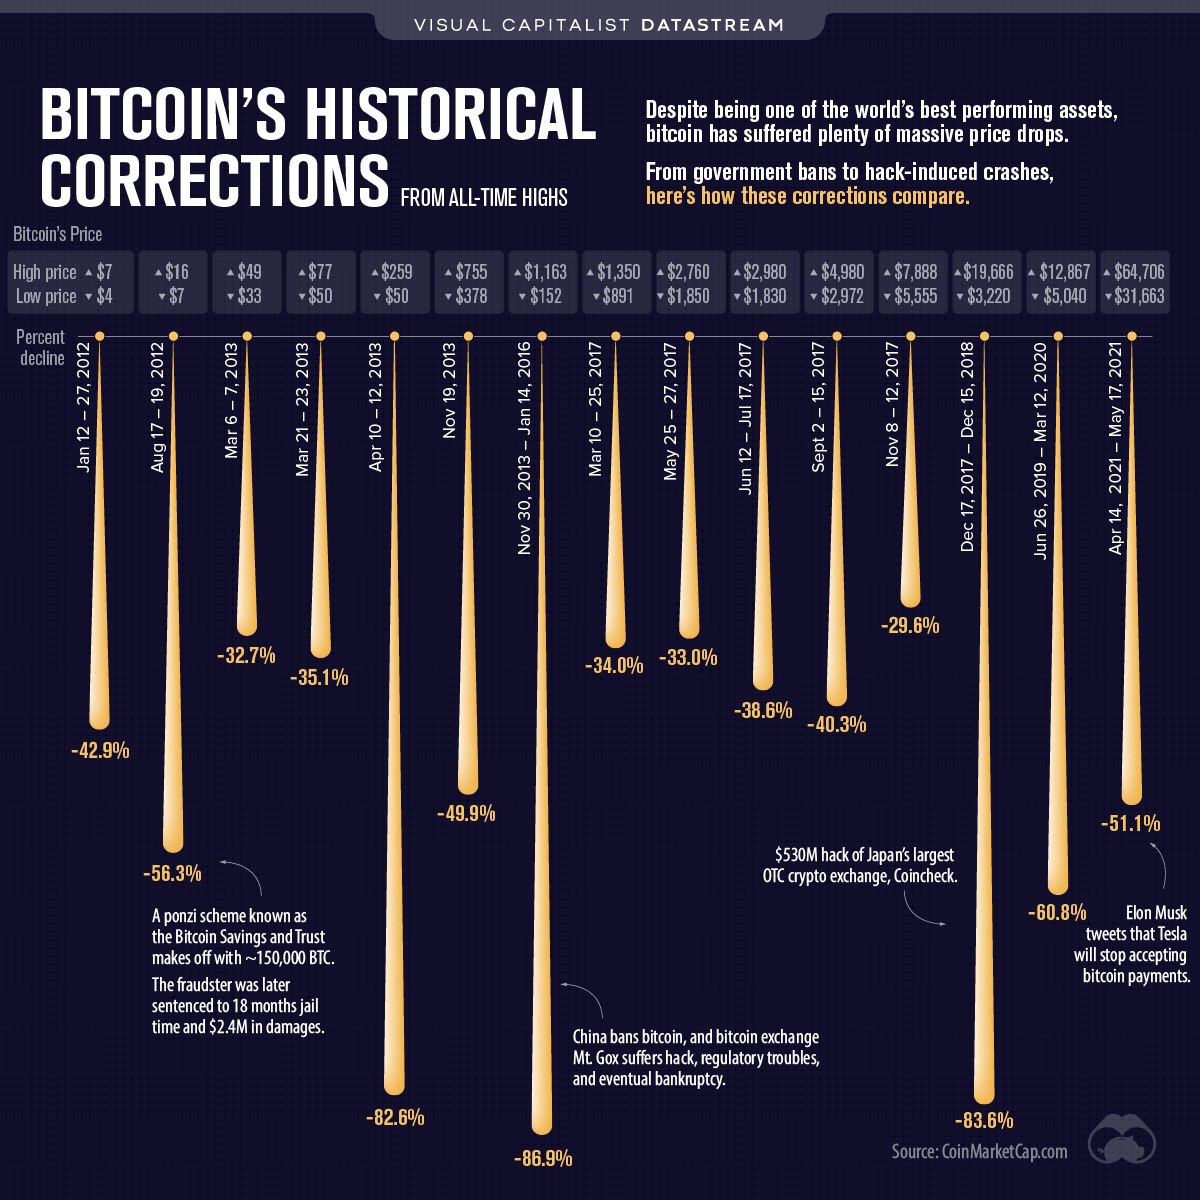 Bitcoin corrections